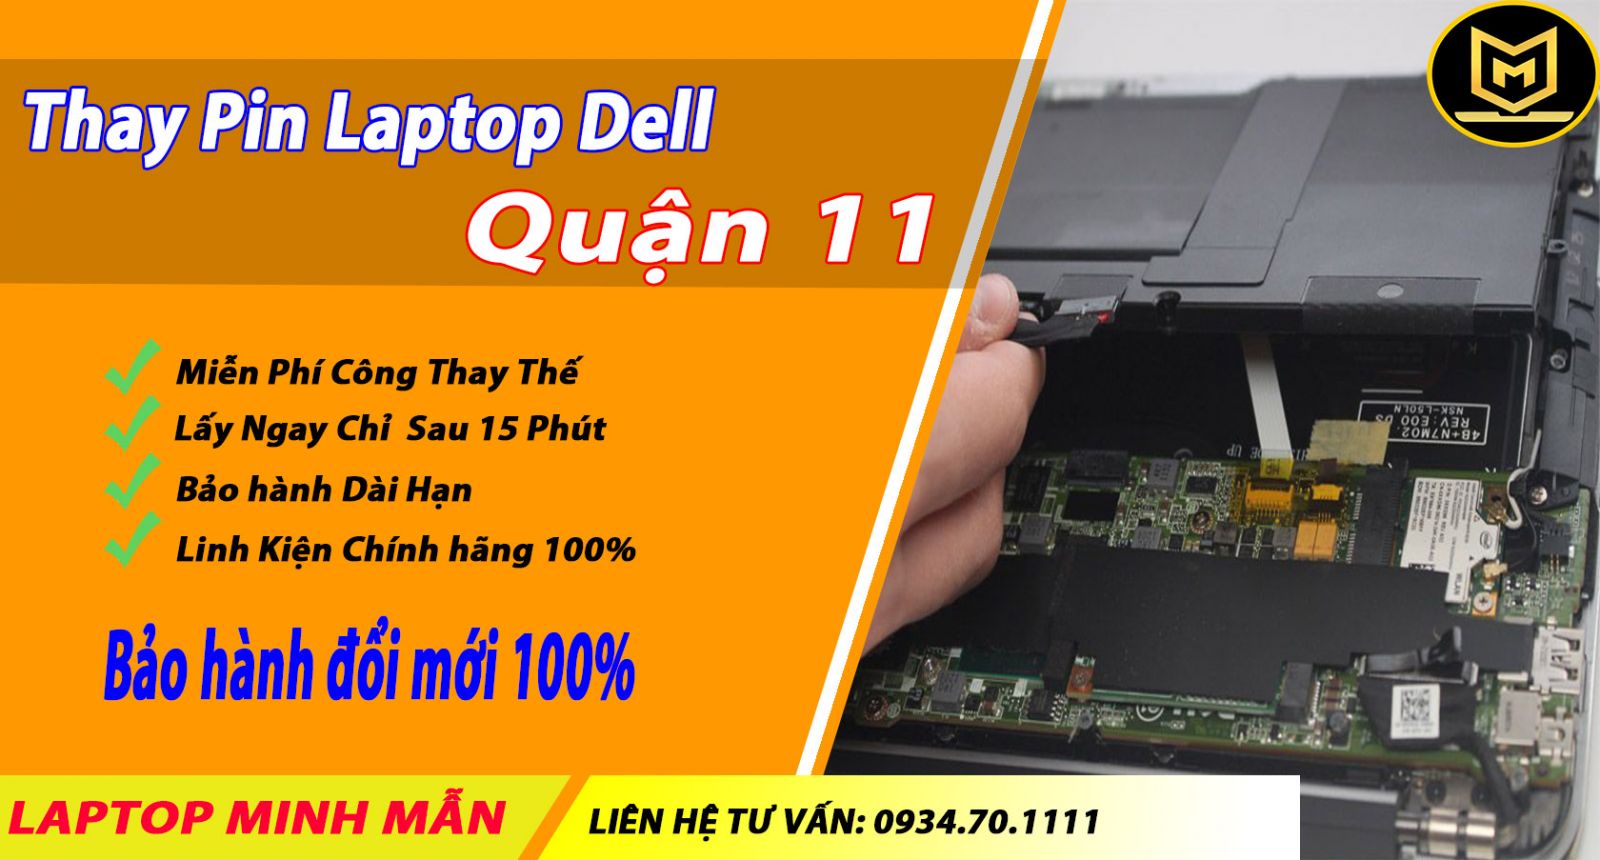 Thay-pin-laptop-Dell-quận-11